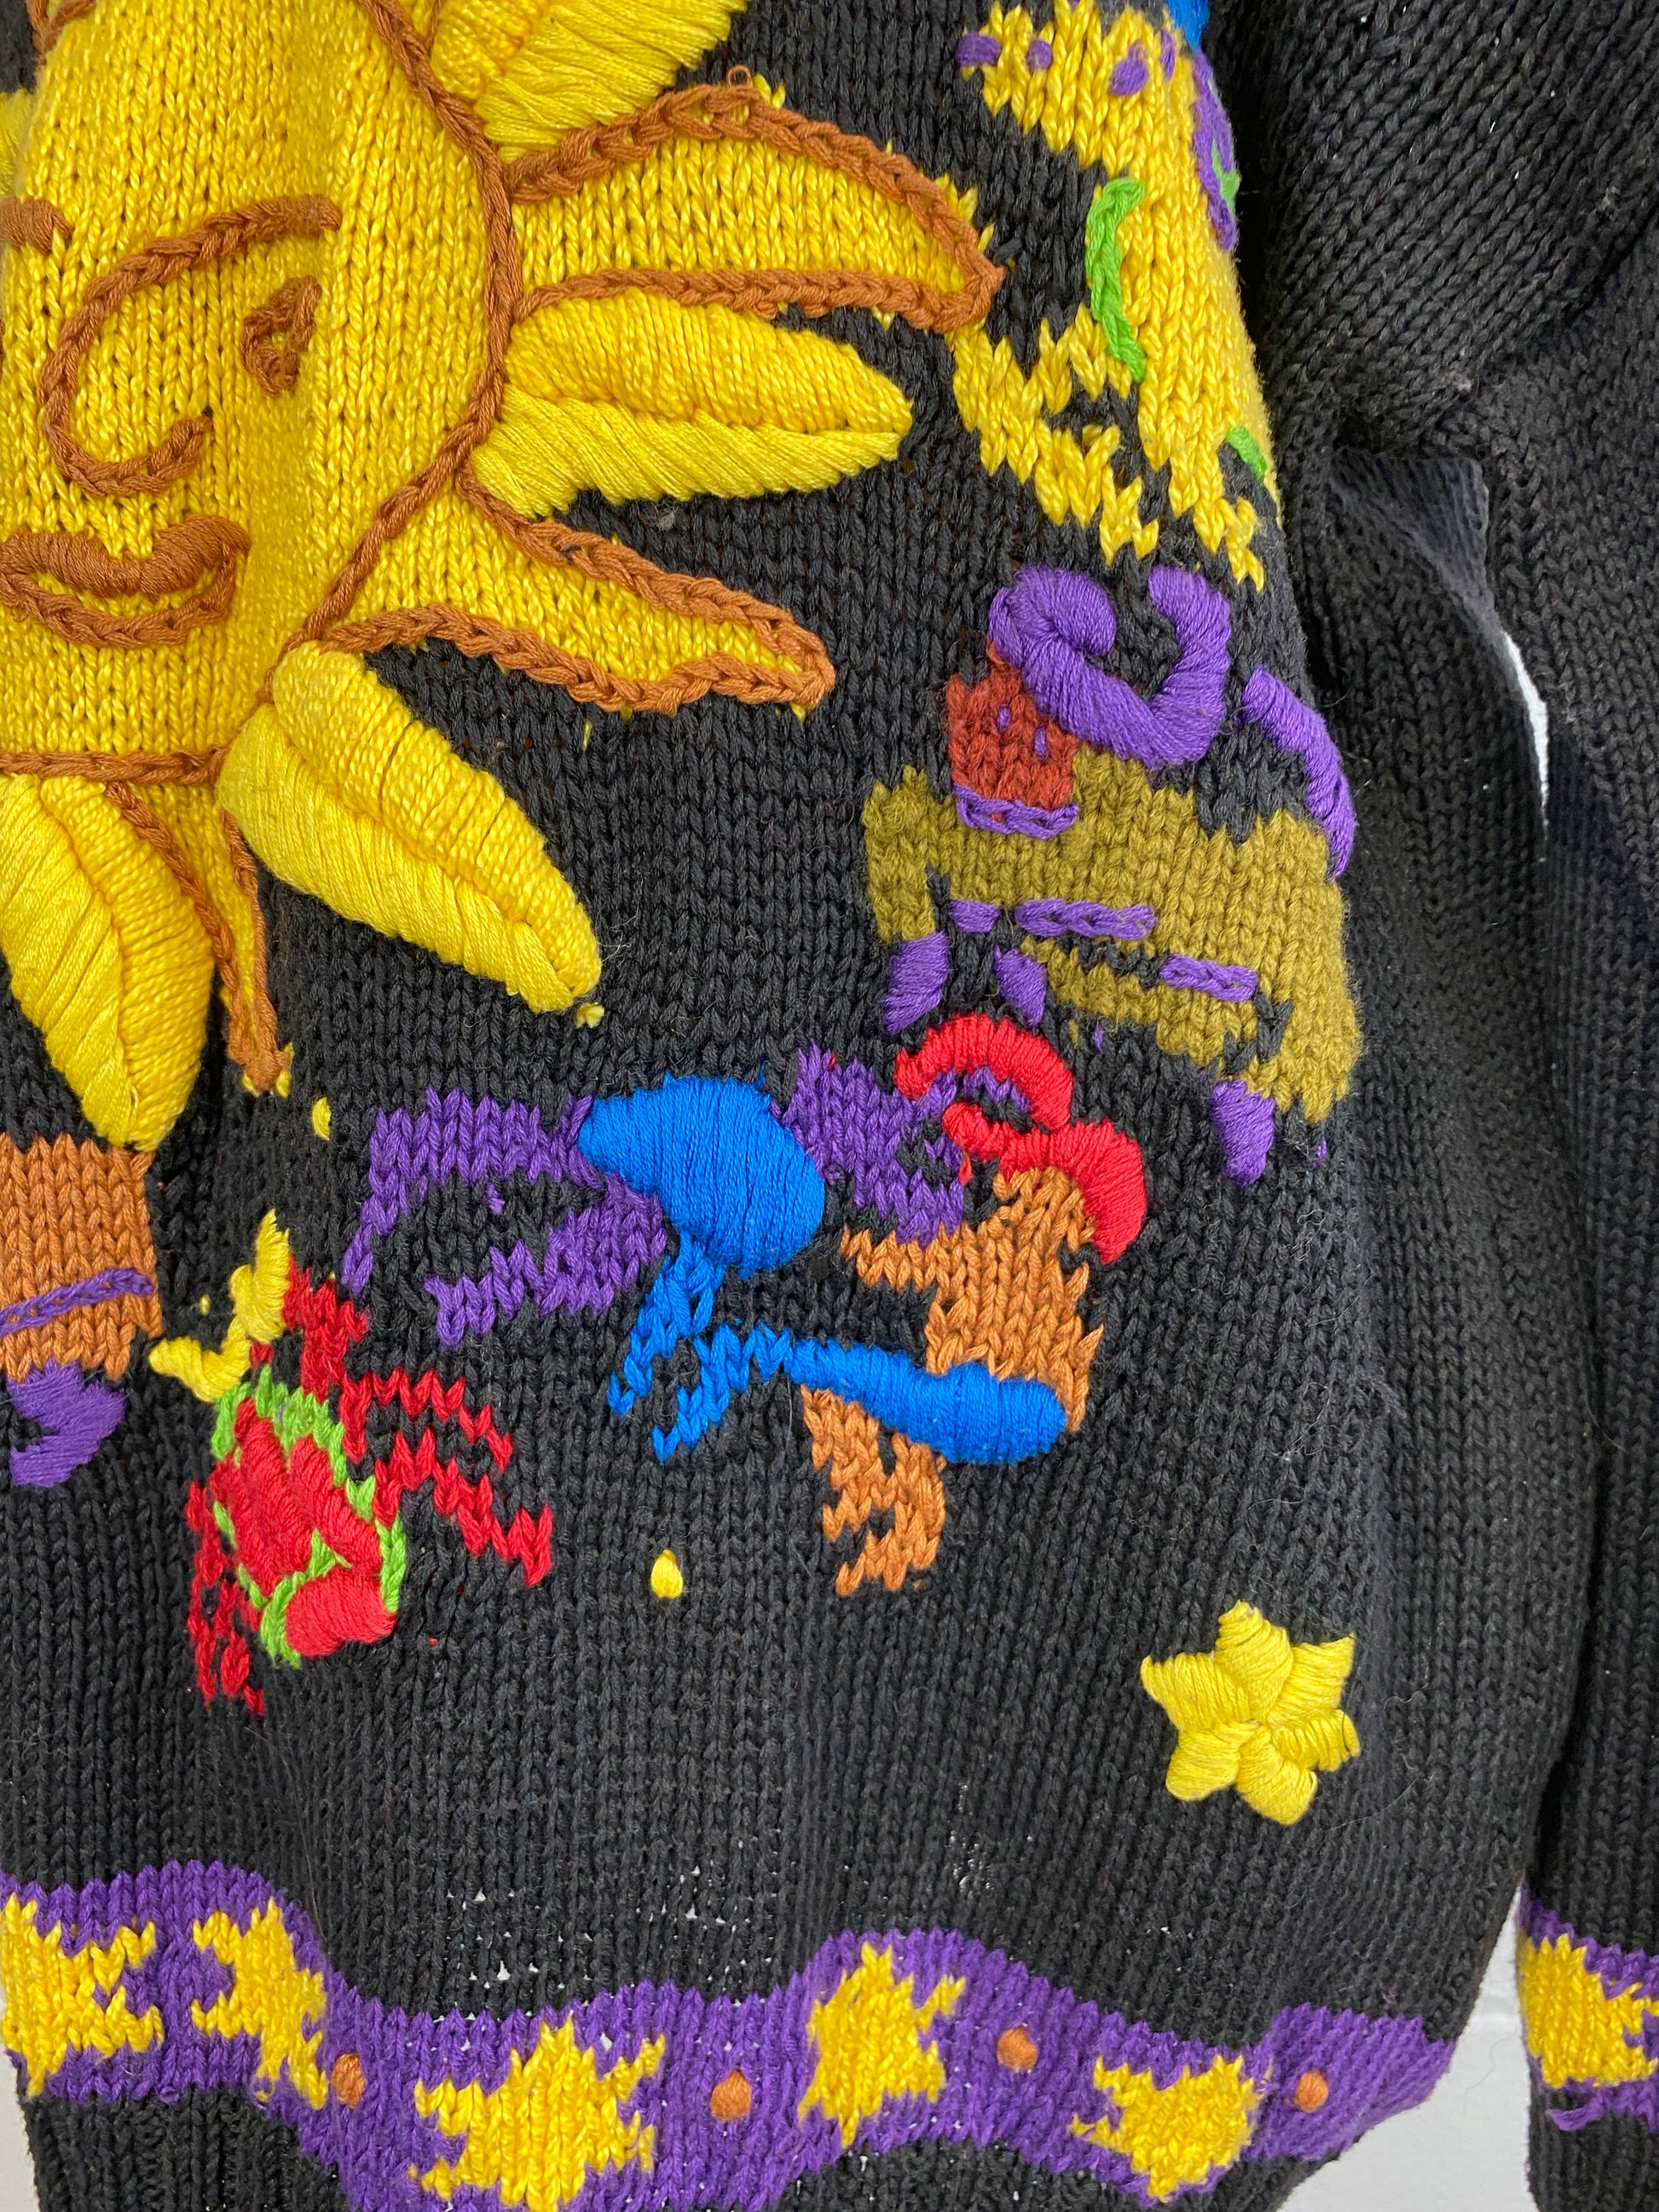 Vintage 1980s Black Embroidered Astrology Motif Cotton Handknit Sweater, L